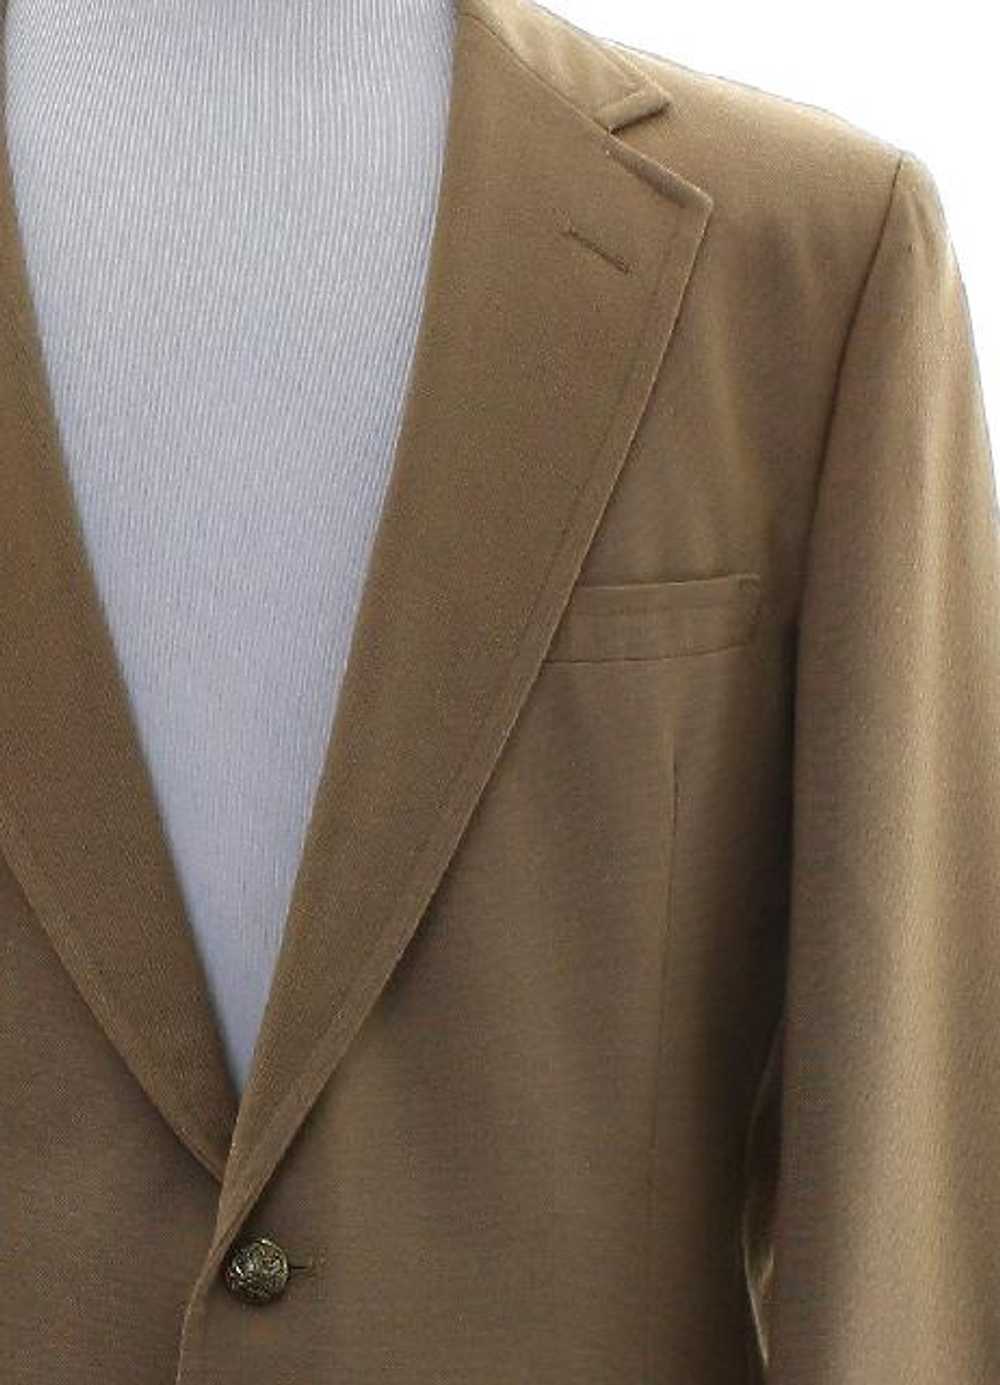 1980's Mens Blazer Style Sport Coat Jacket - image 2